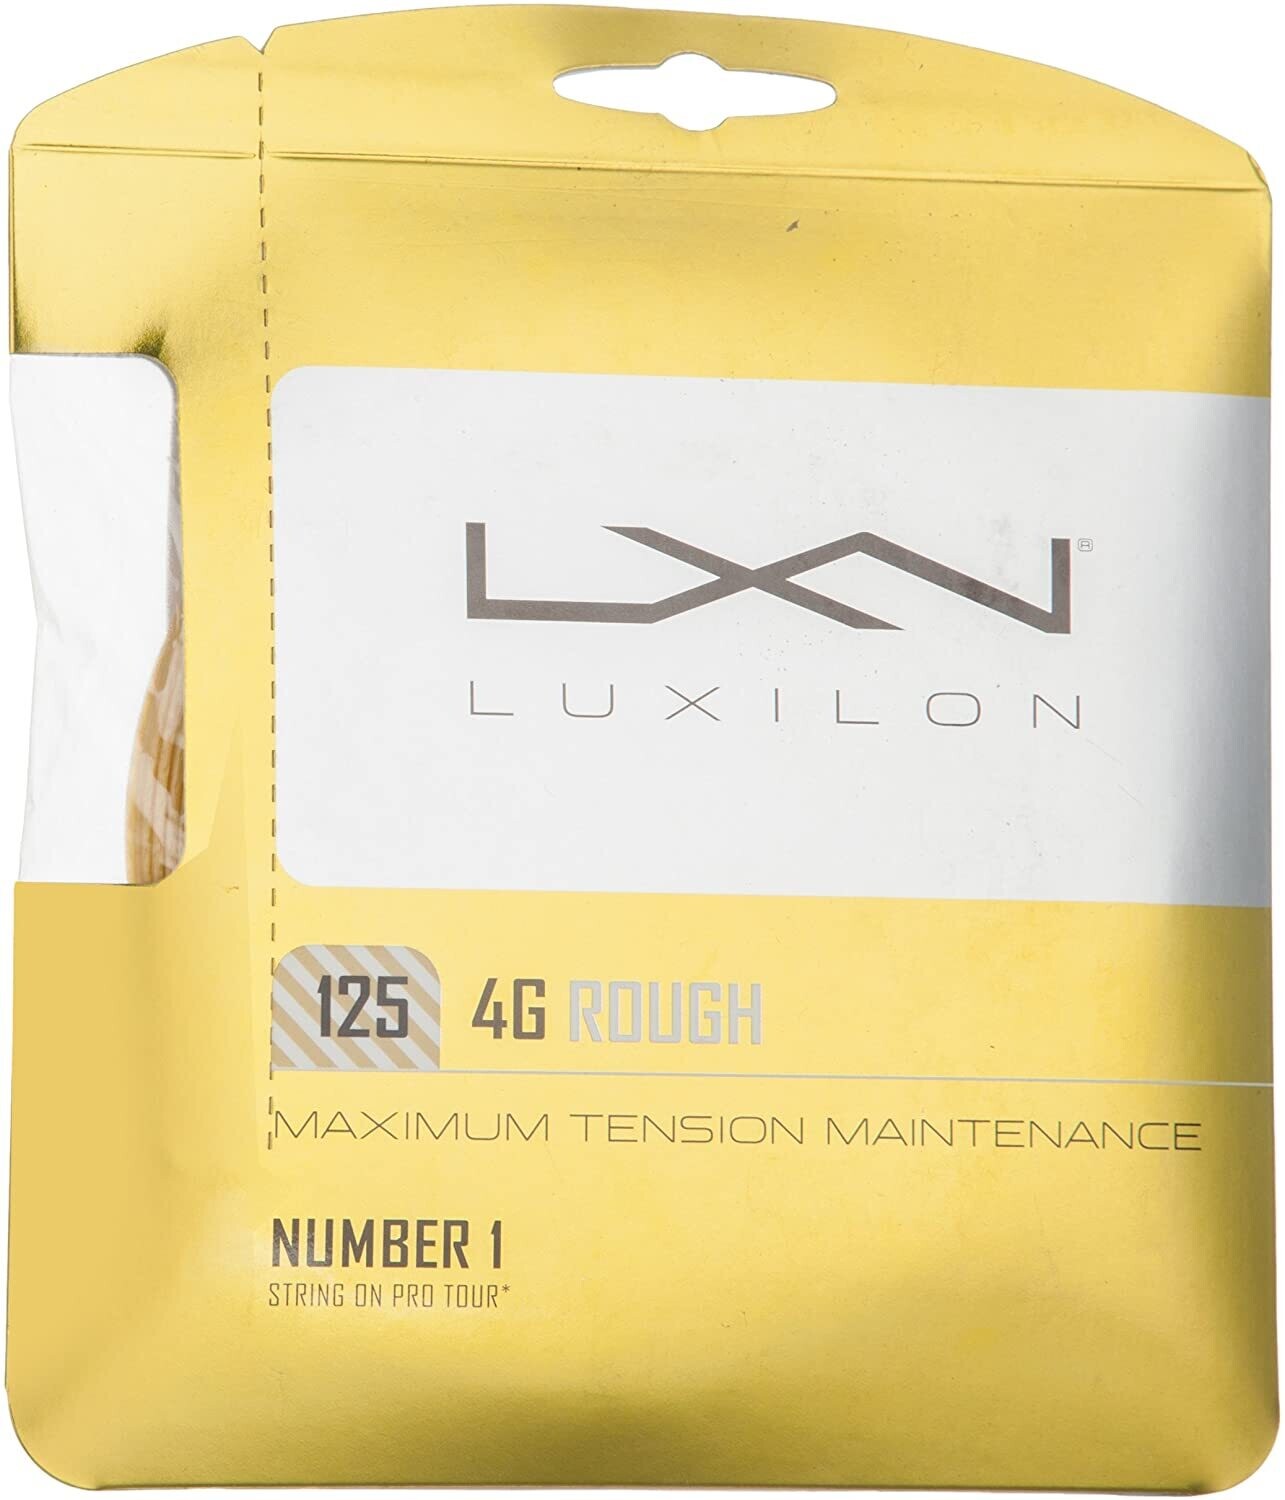 Luxilon 4G Rough 125 Tennis String Set Gold